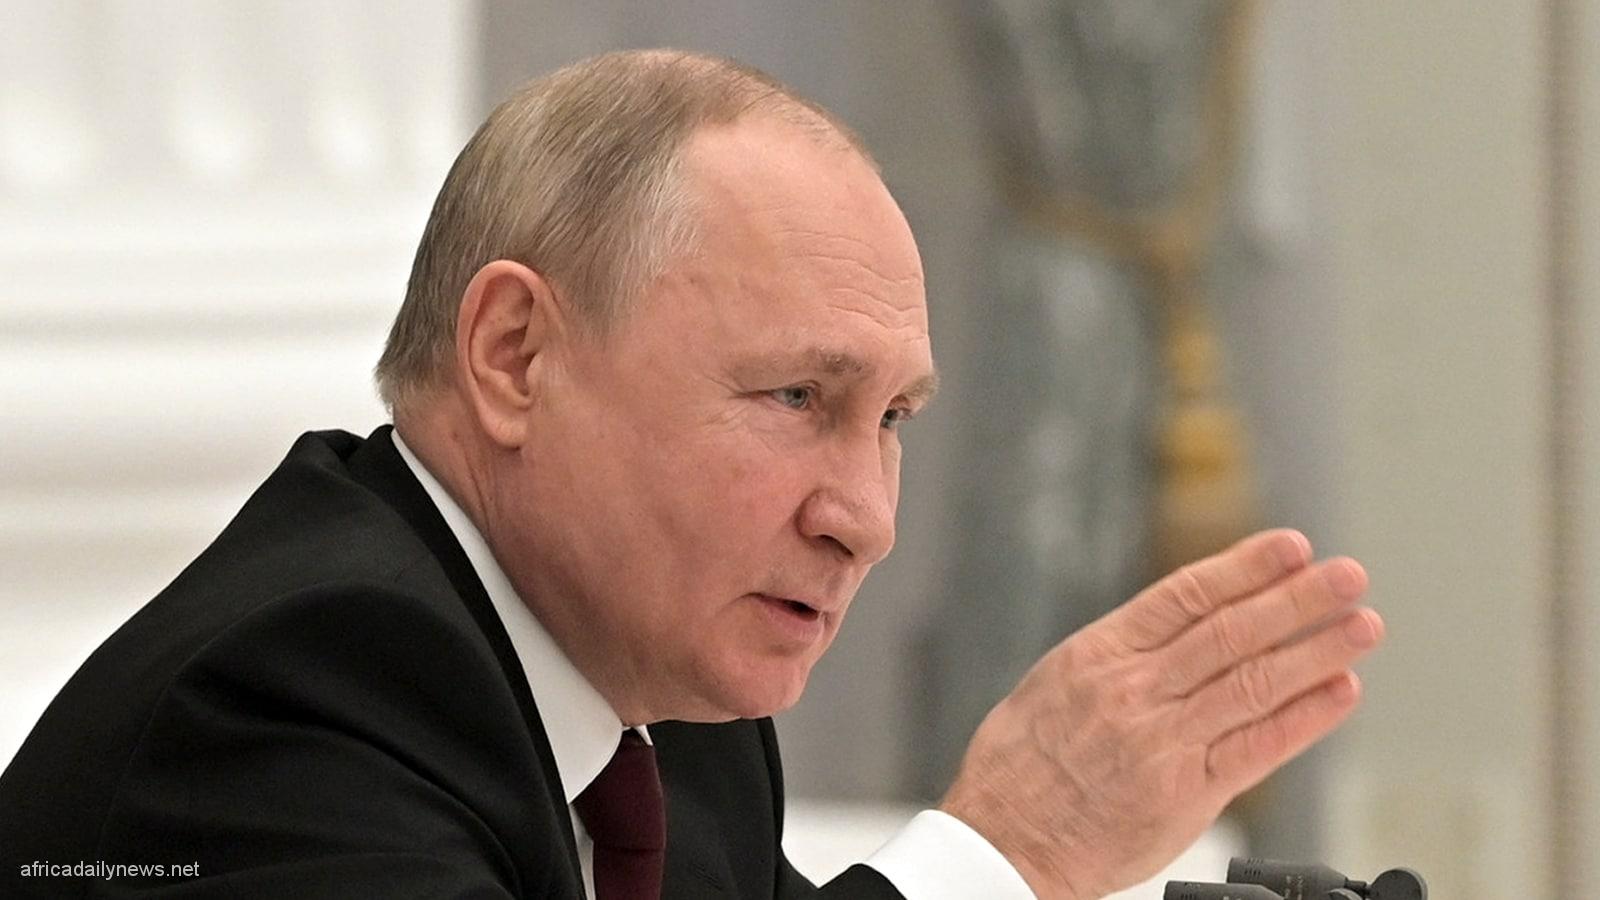 Ukraine Russia’s Interests ‘Non-Negotiable', Putin Insists